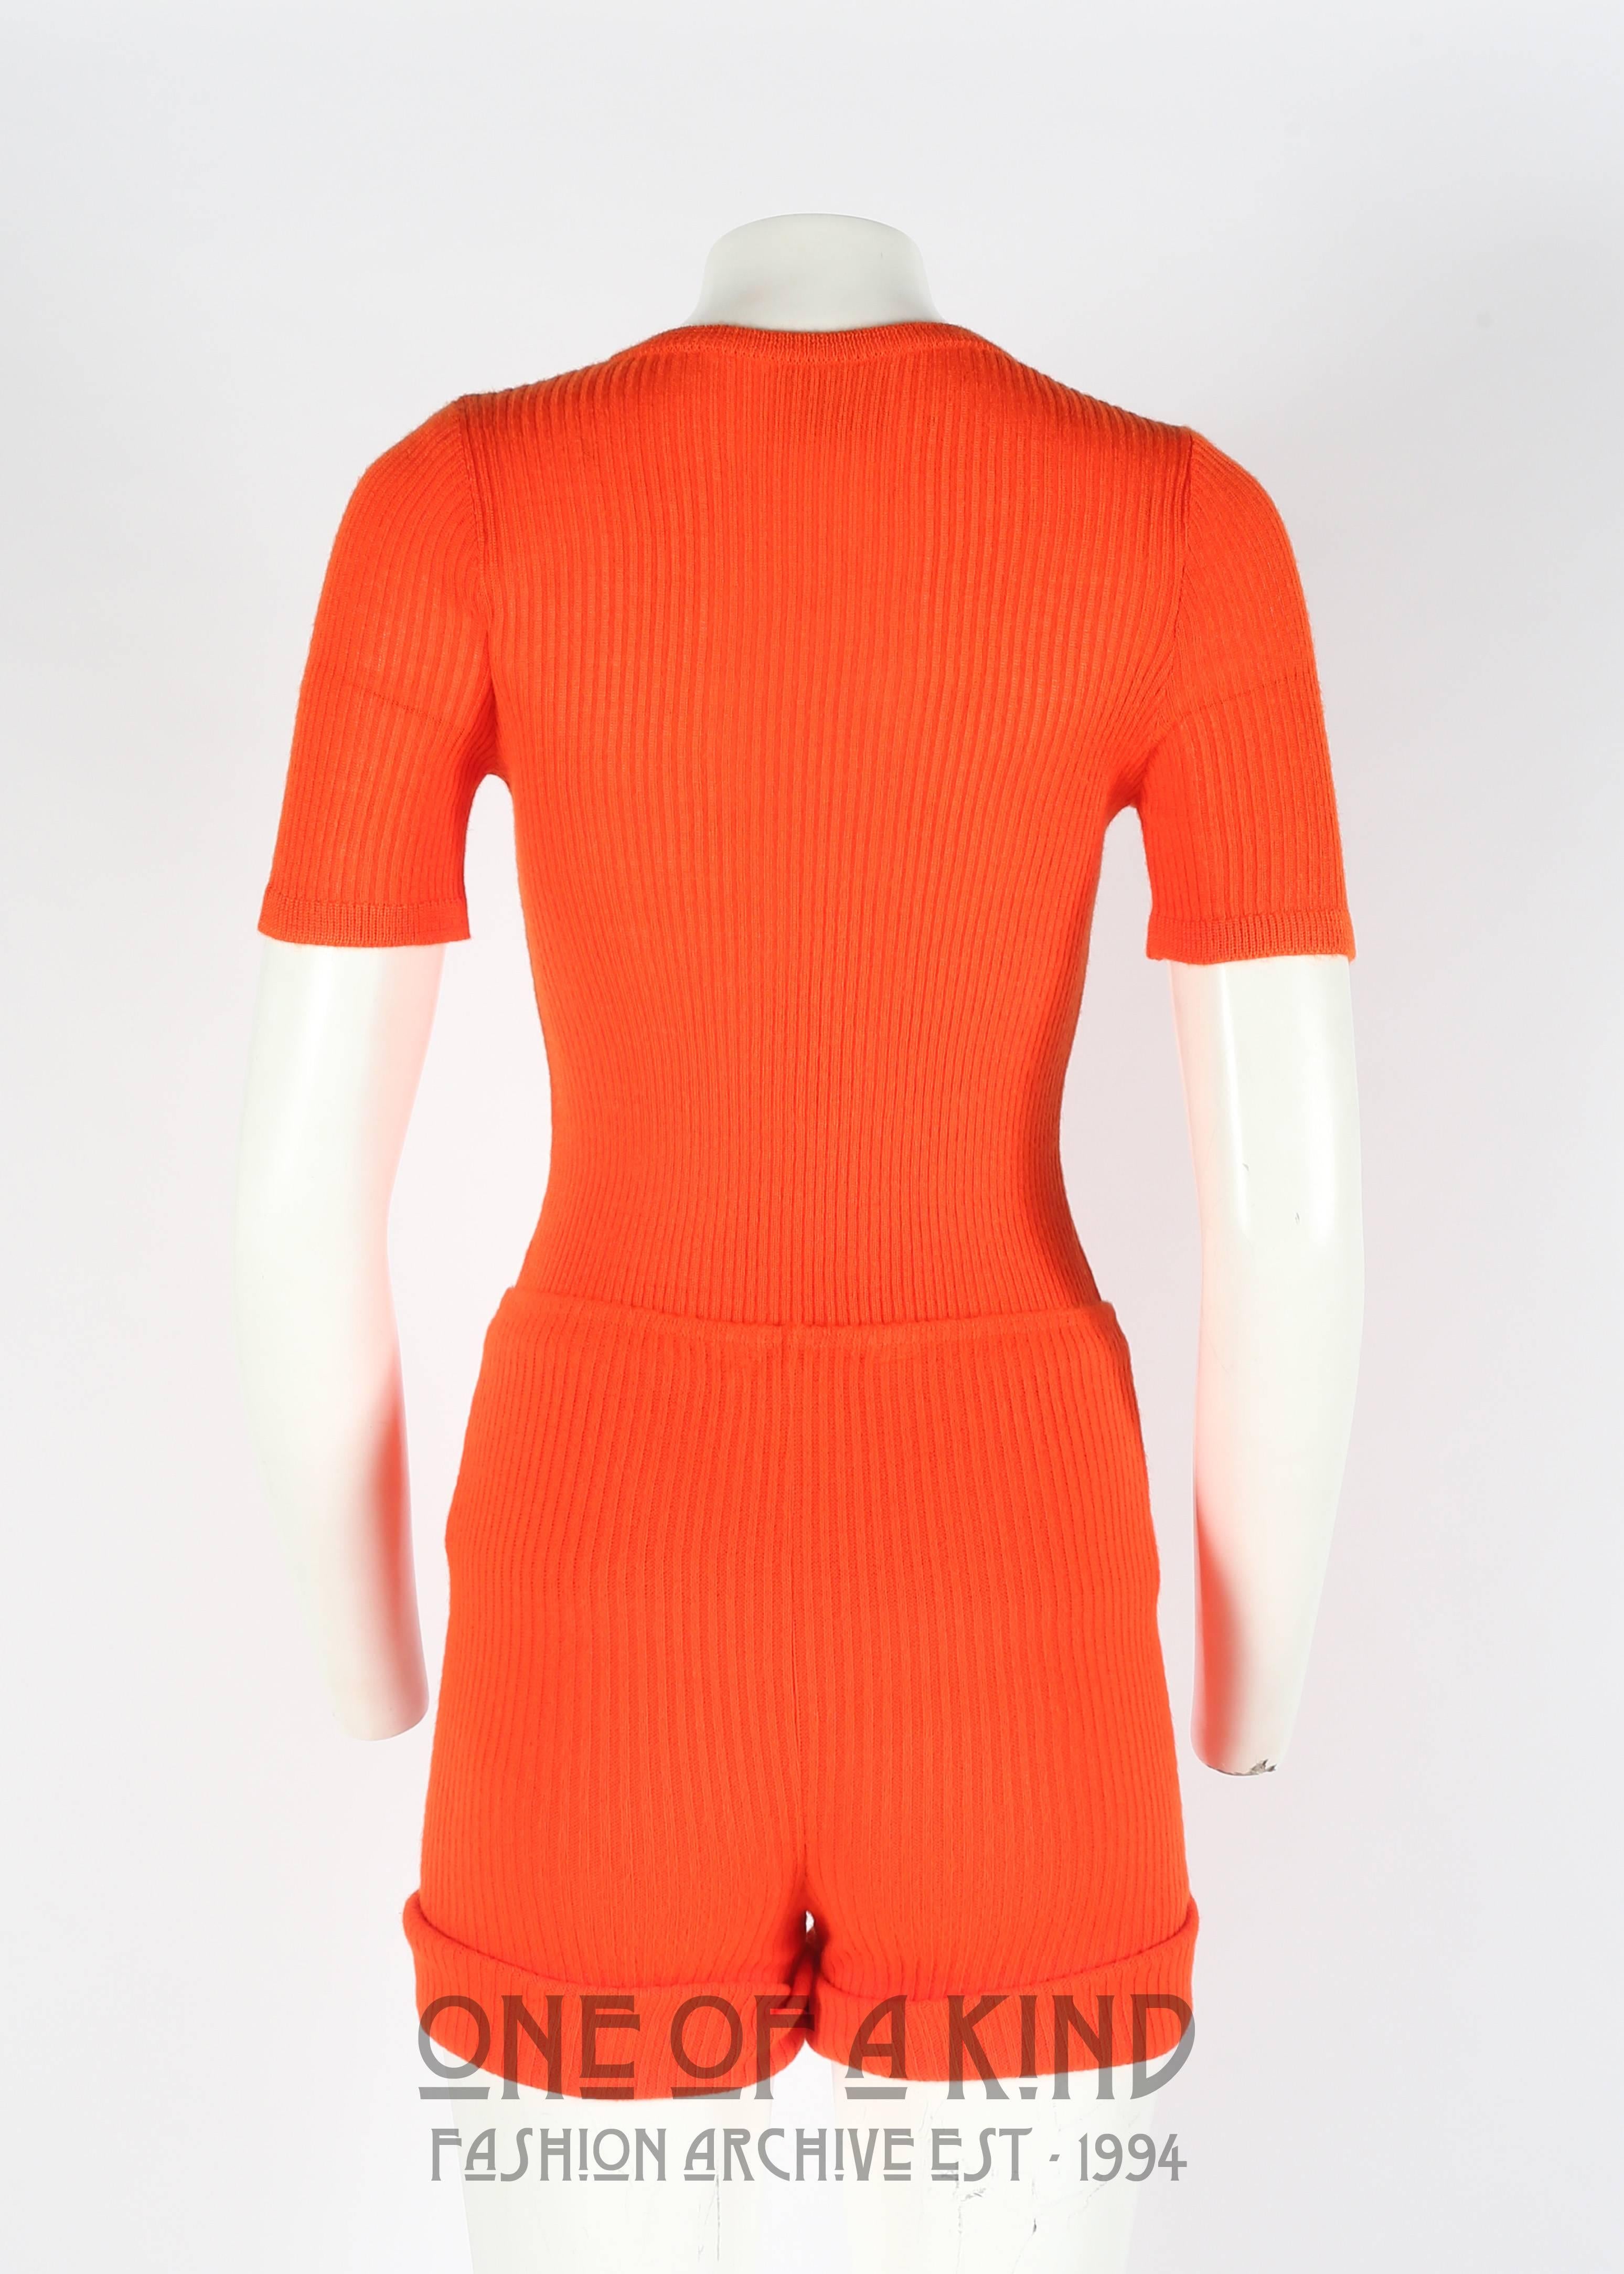 Women's Courreges 1960s orange rib knit shorts and t-shirt ensemble 